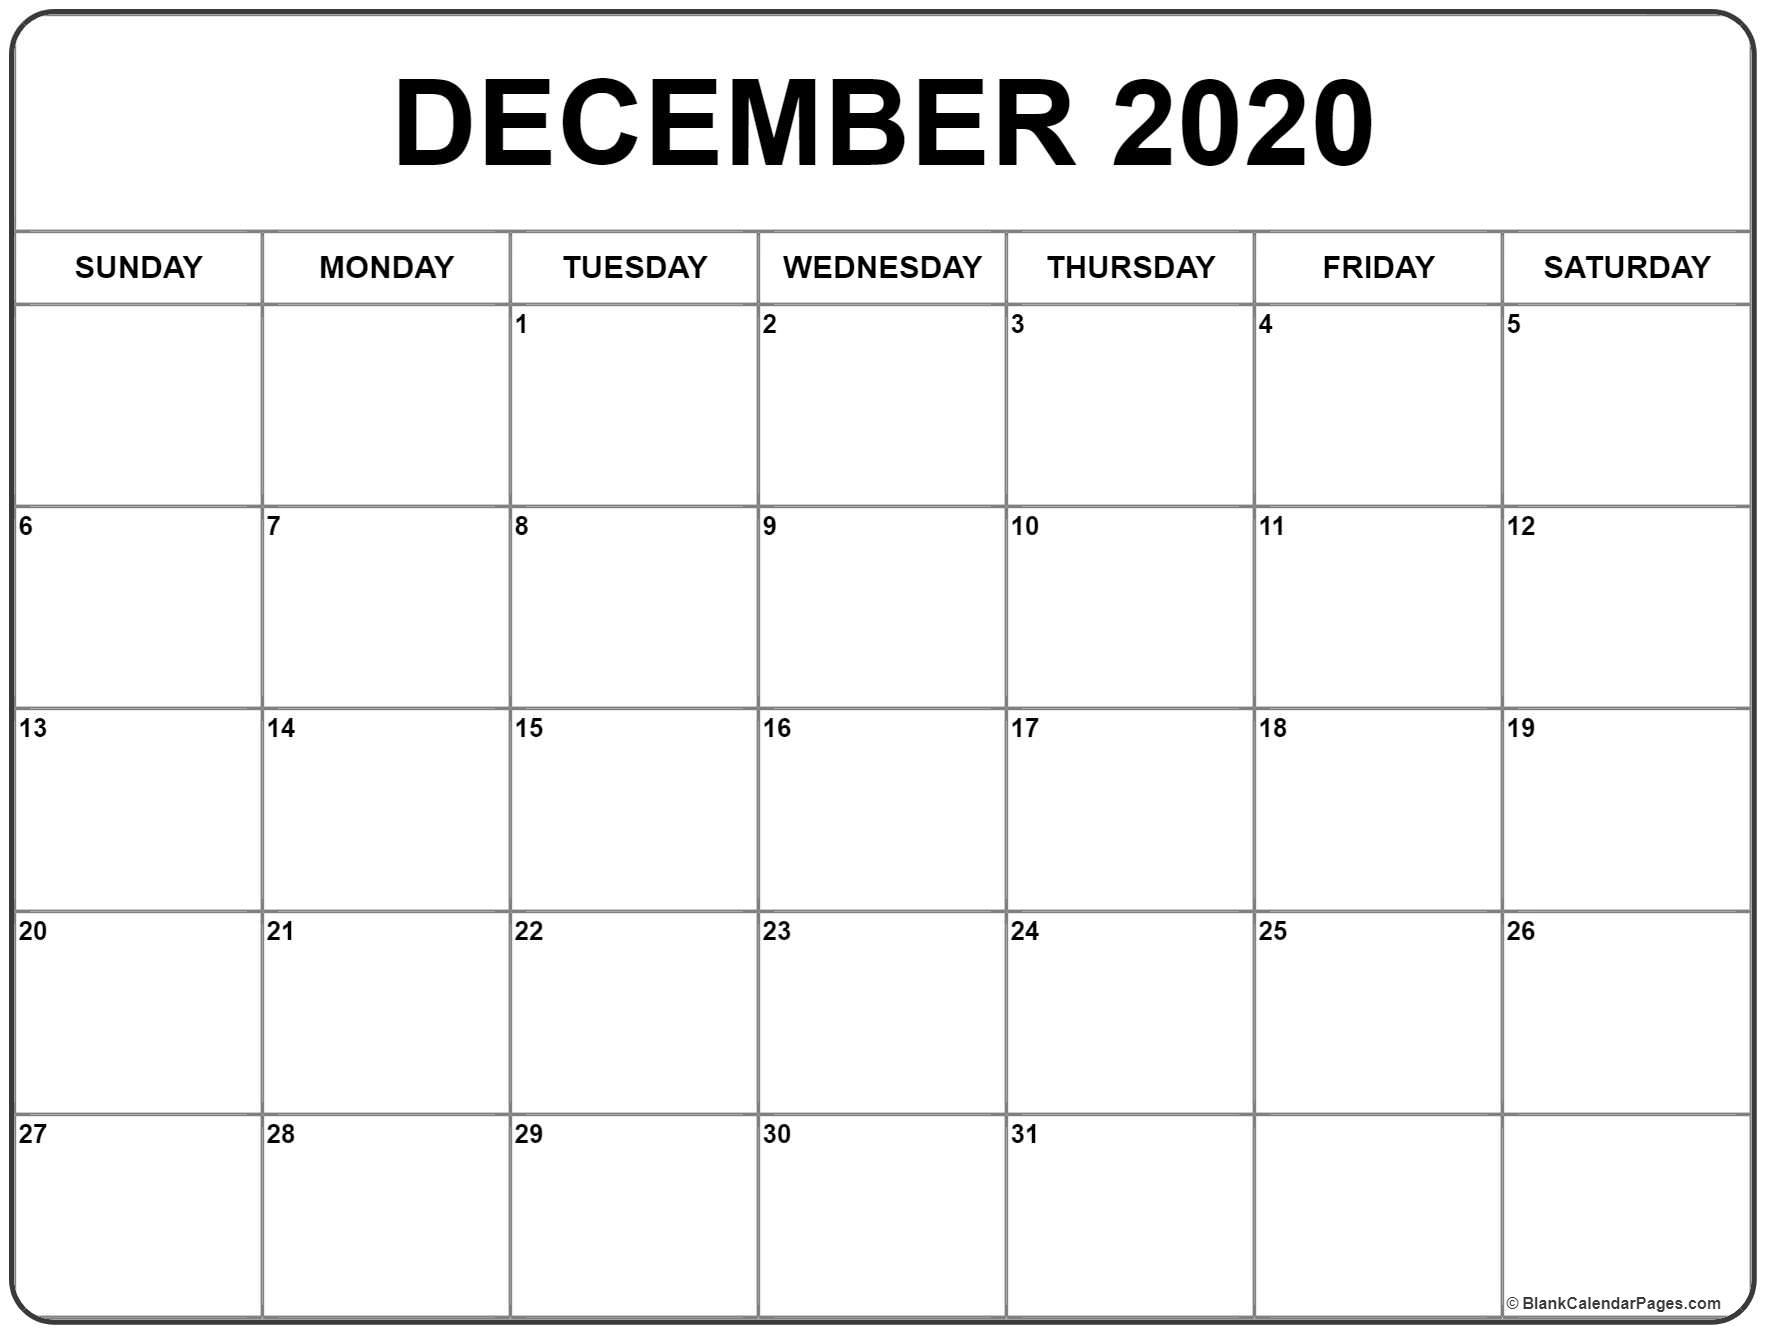 December Blank Calendar 2020 - Wpa.wpart.co